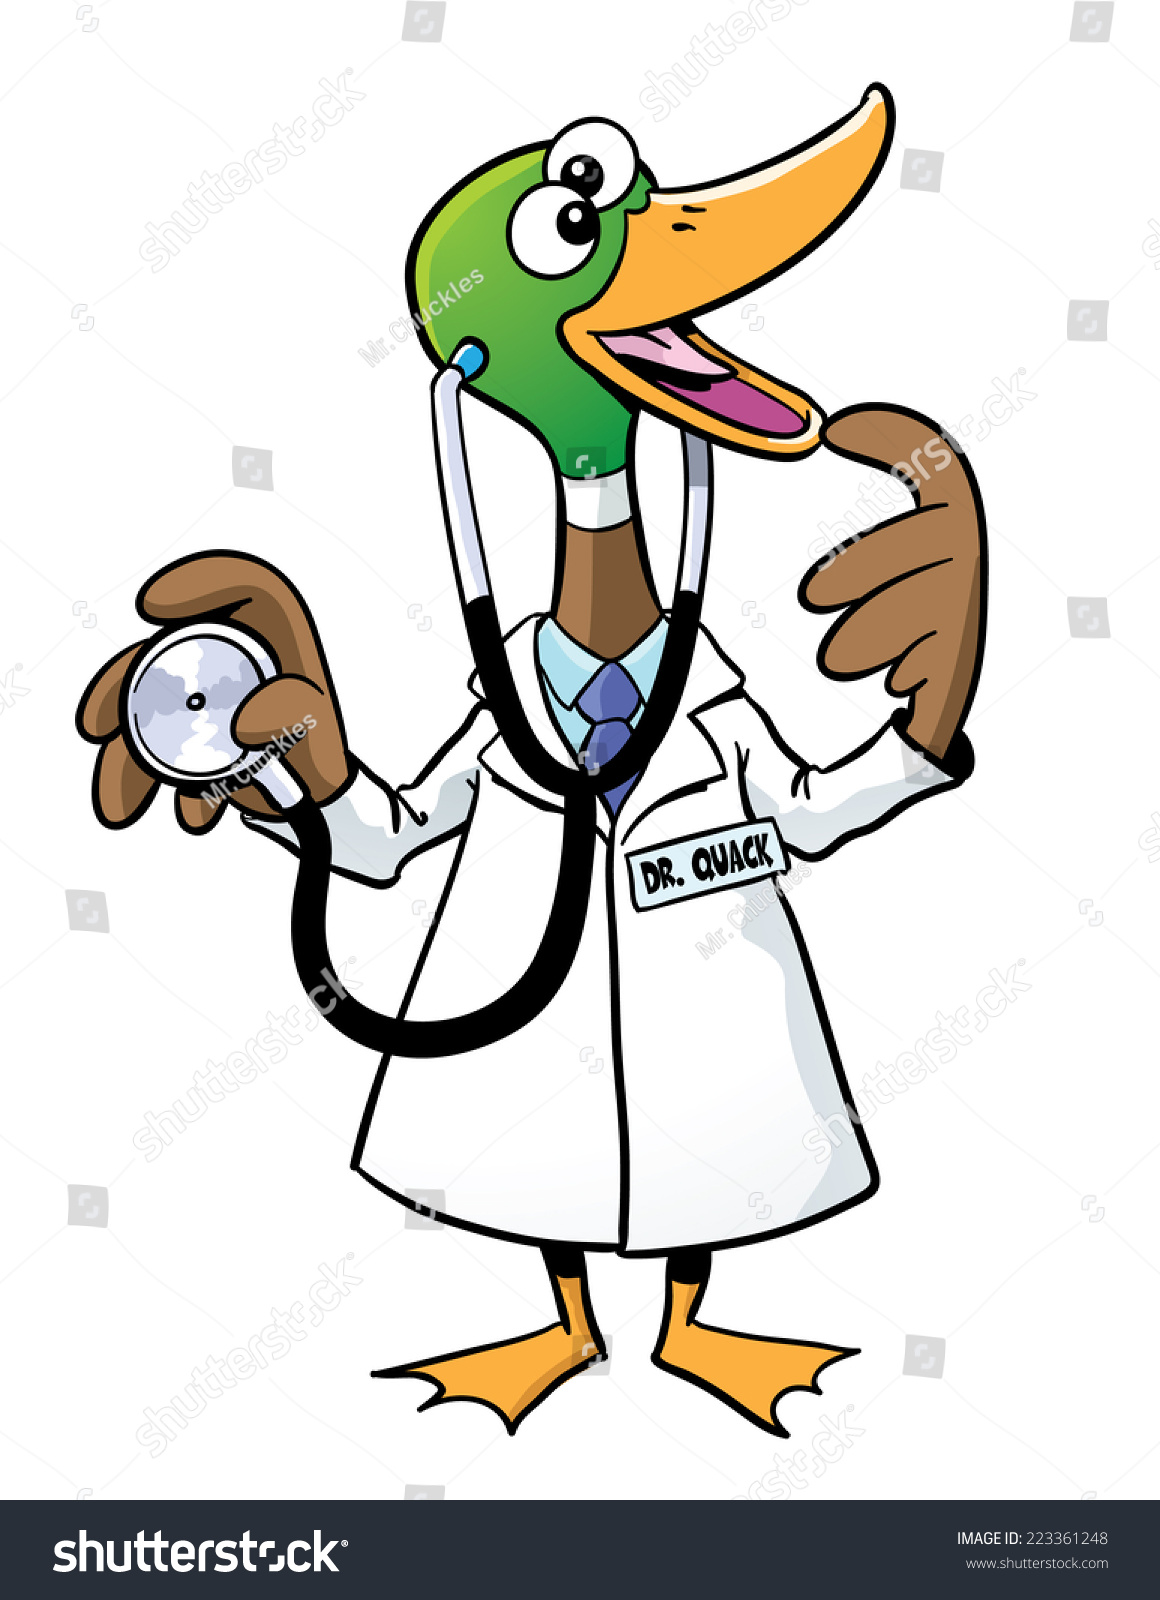 stock-vector-cartoon-duck-quack-doctor-with-stethoscope-223361248.jpg